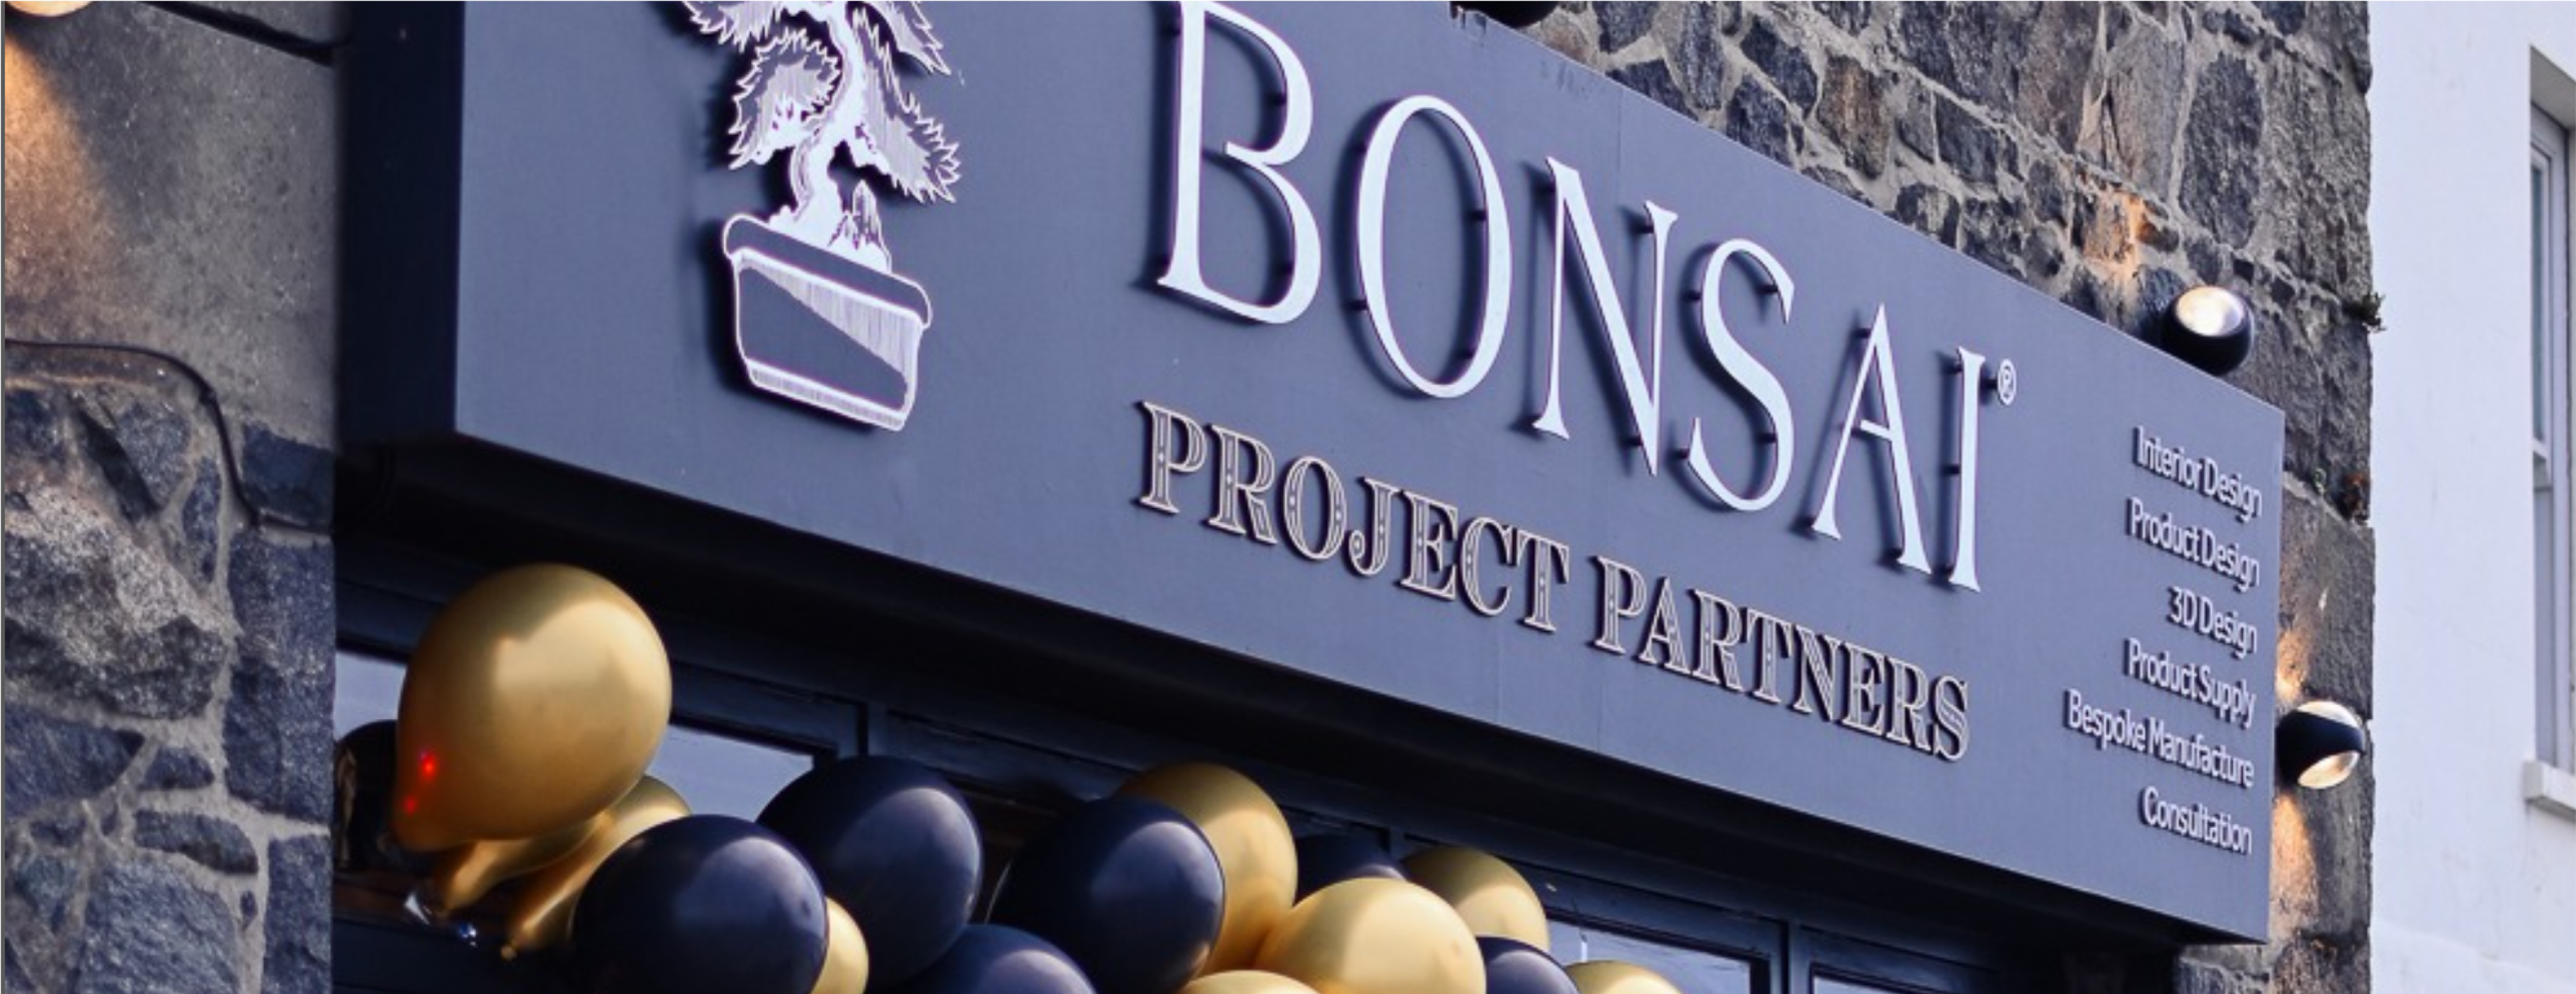 Bonsai Project Partners showroom